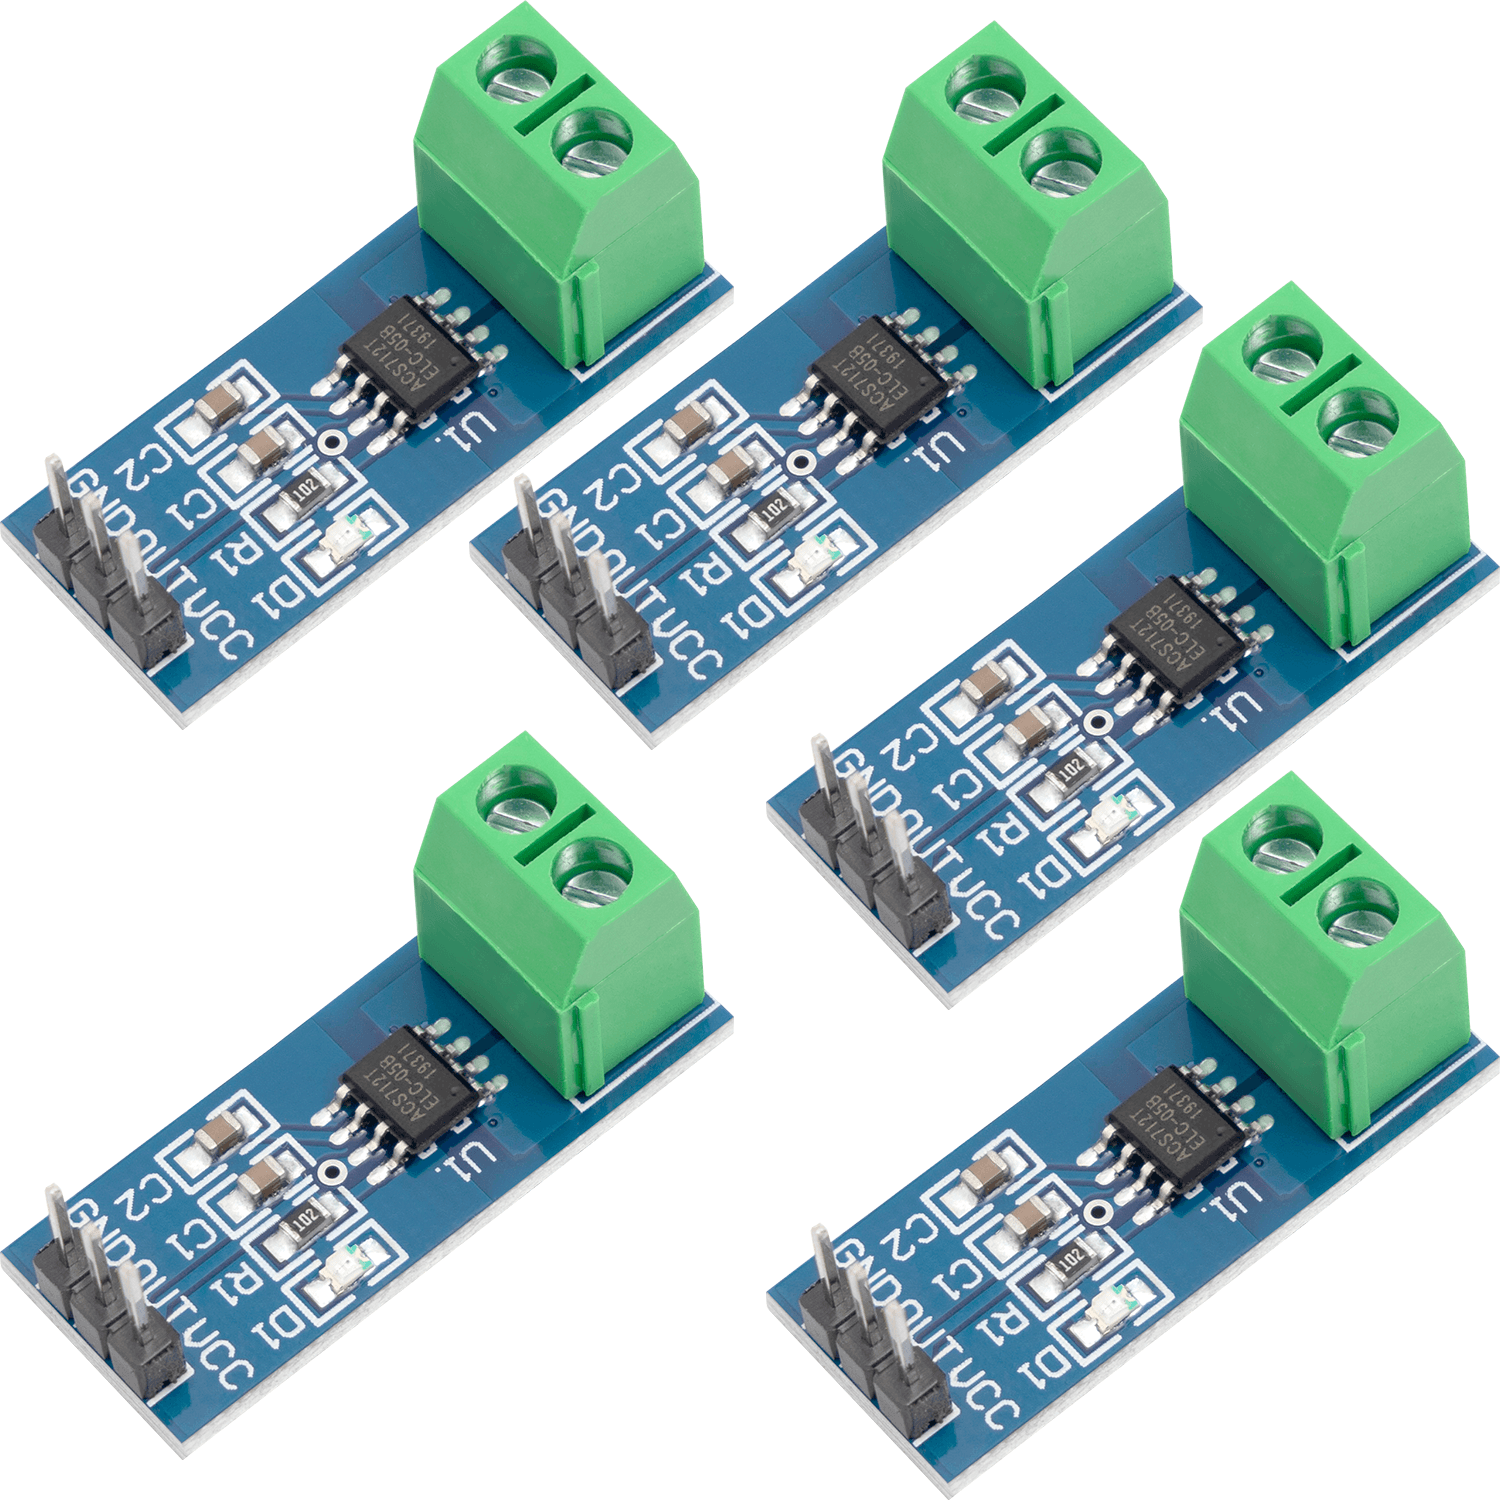 ACS712 Stromsensor 5A Messbereich Range Modul Current Sensor kompatibel mit Arduino - AZ-Delivery